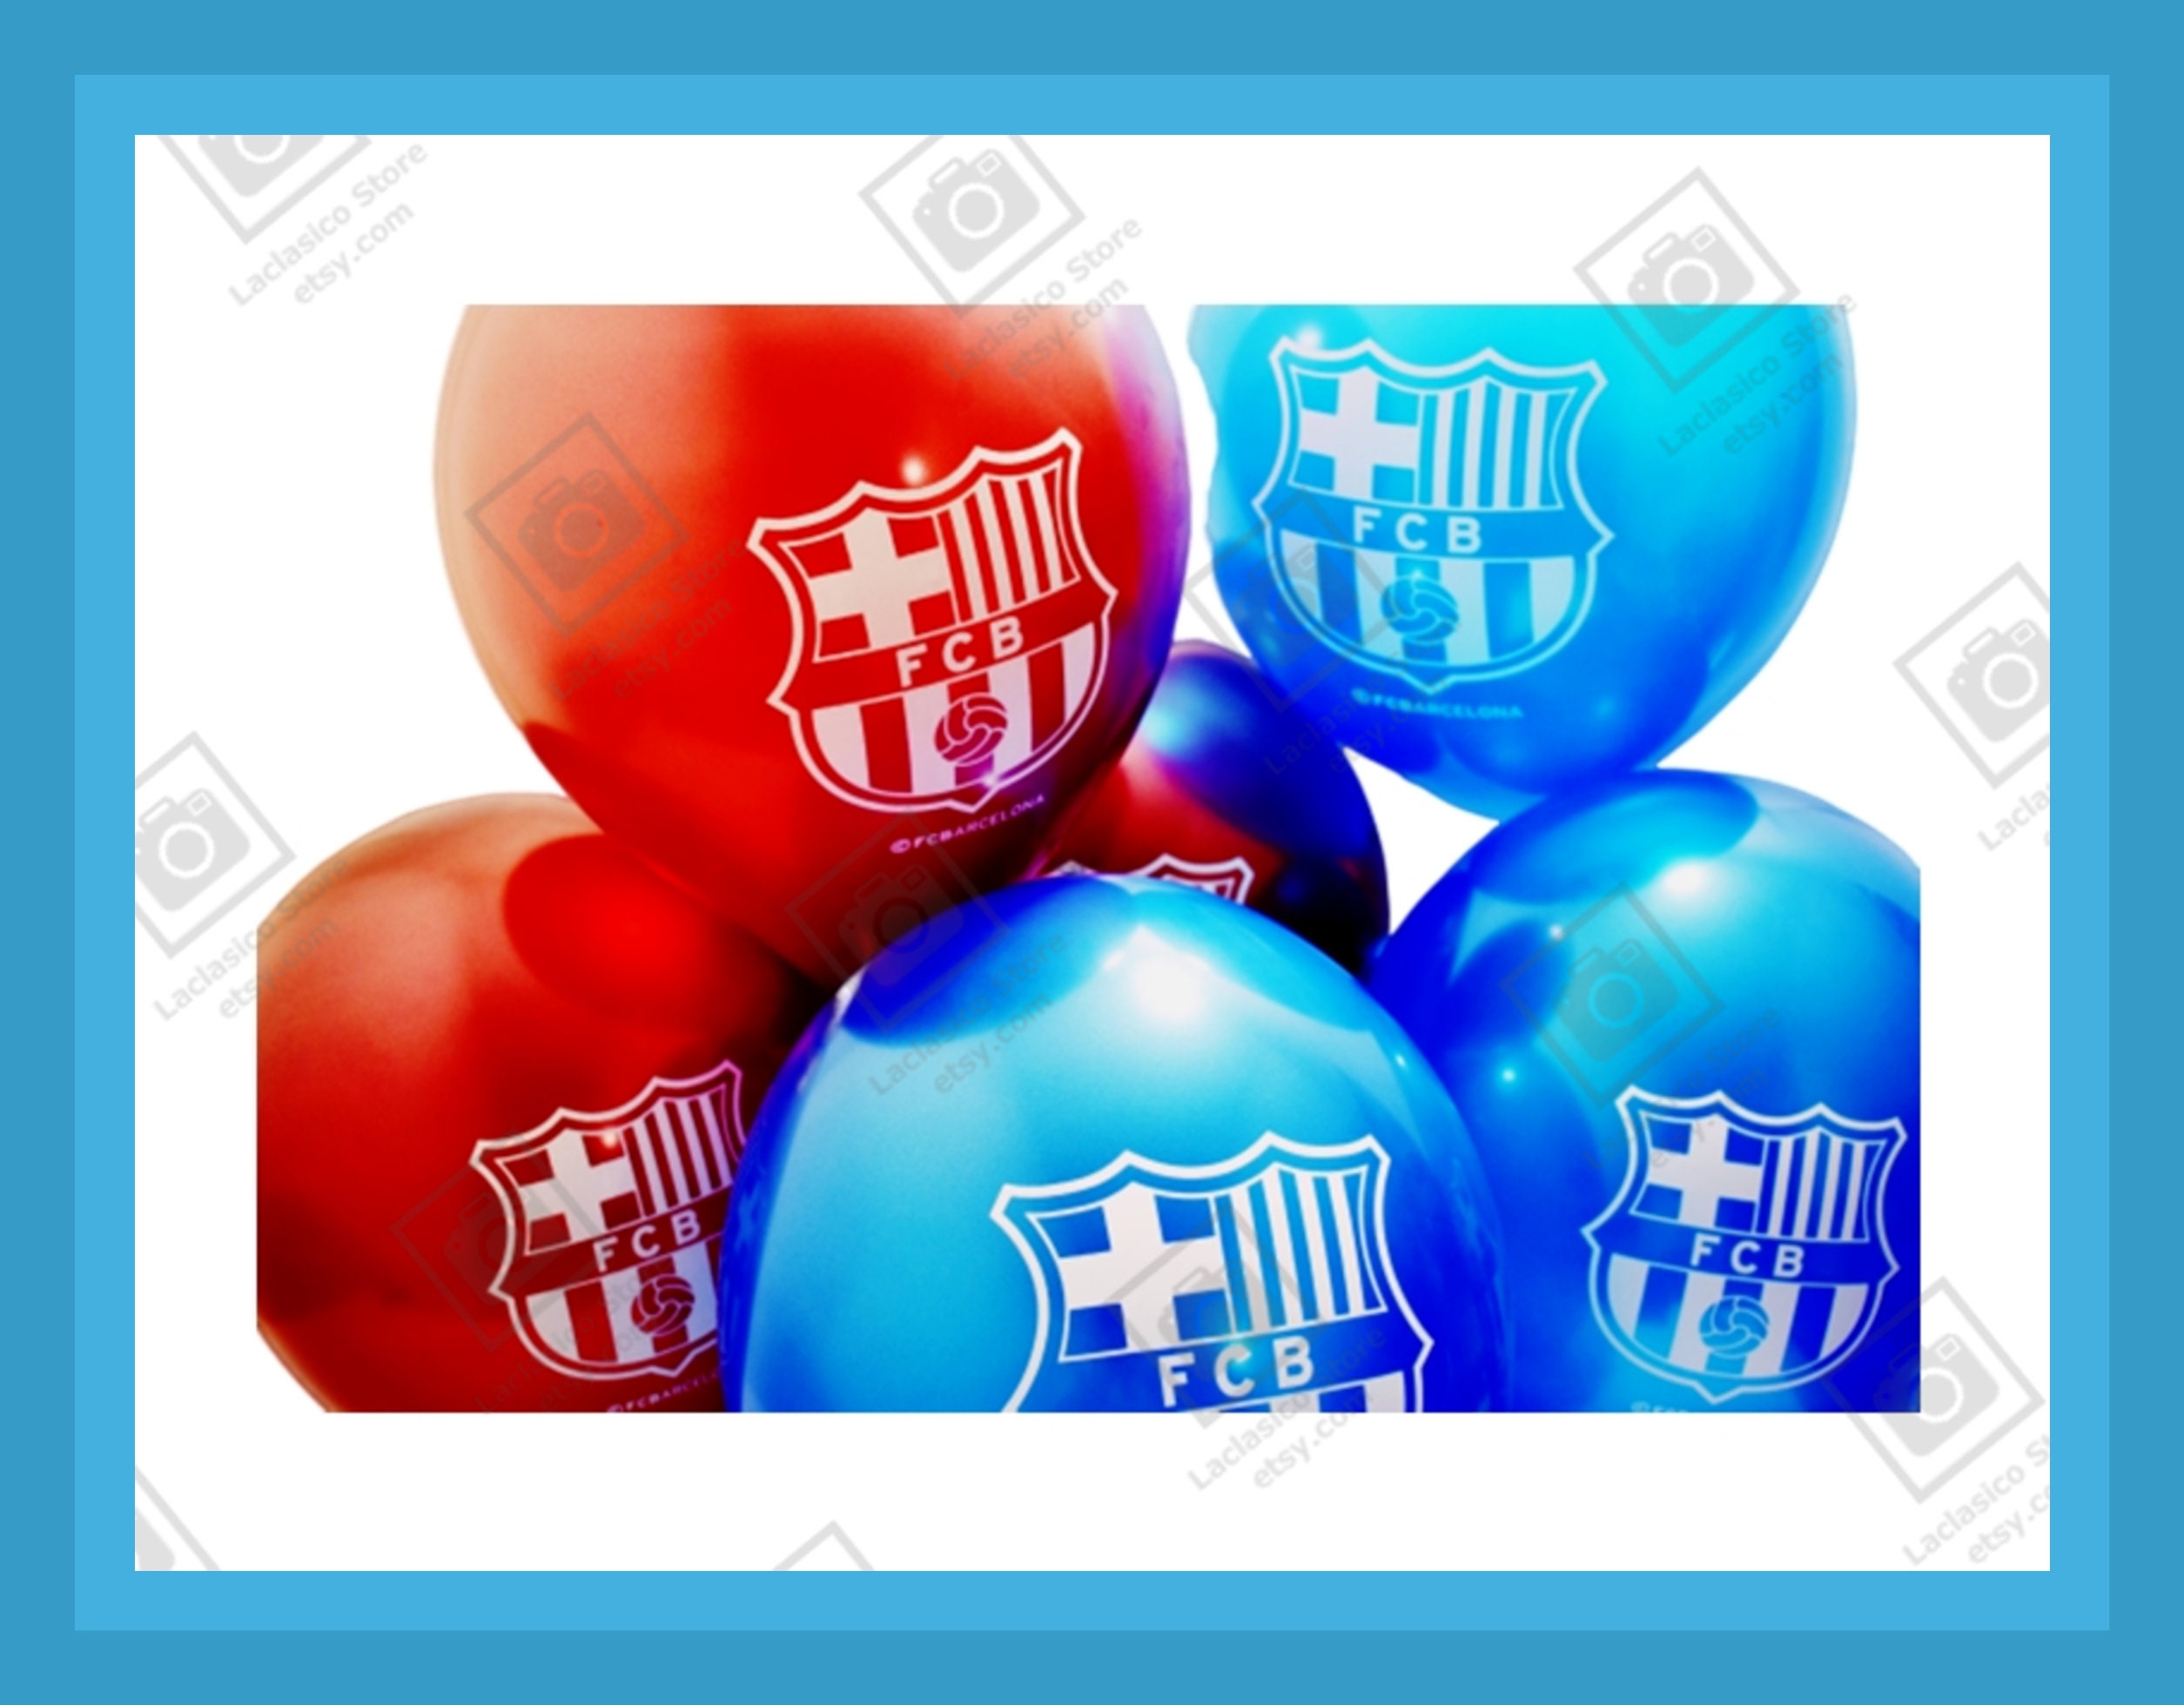 Evalueerbaar Lao Koken FC Barcelona Birthday Party Supplies Balloons 10 PCS Latex | Etsy